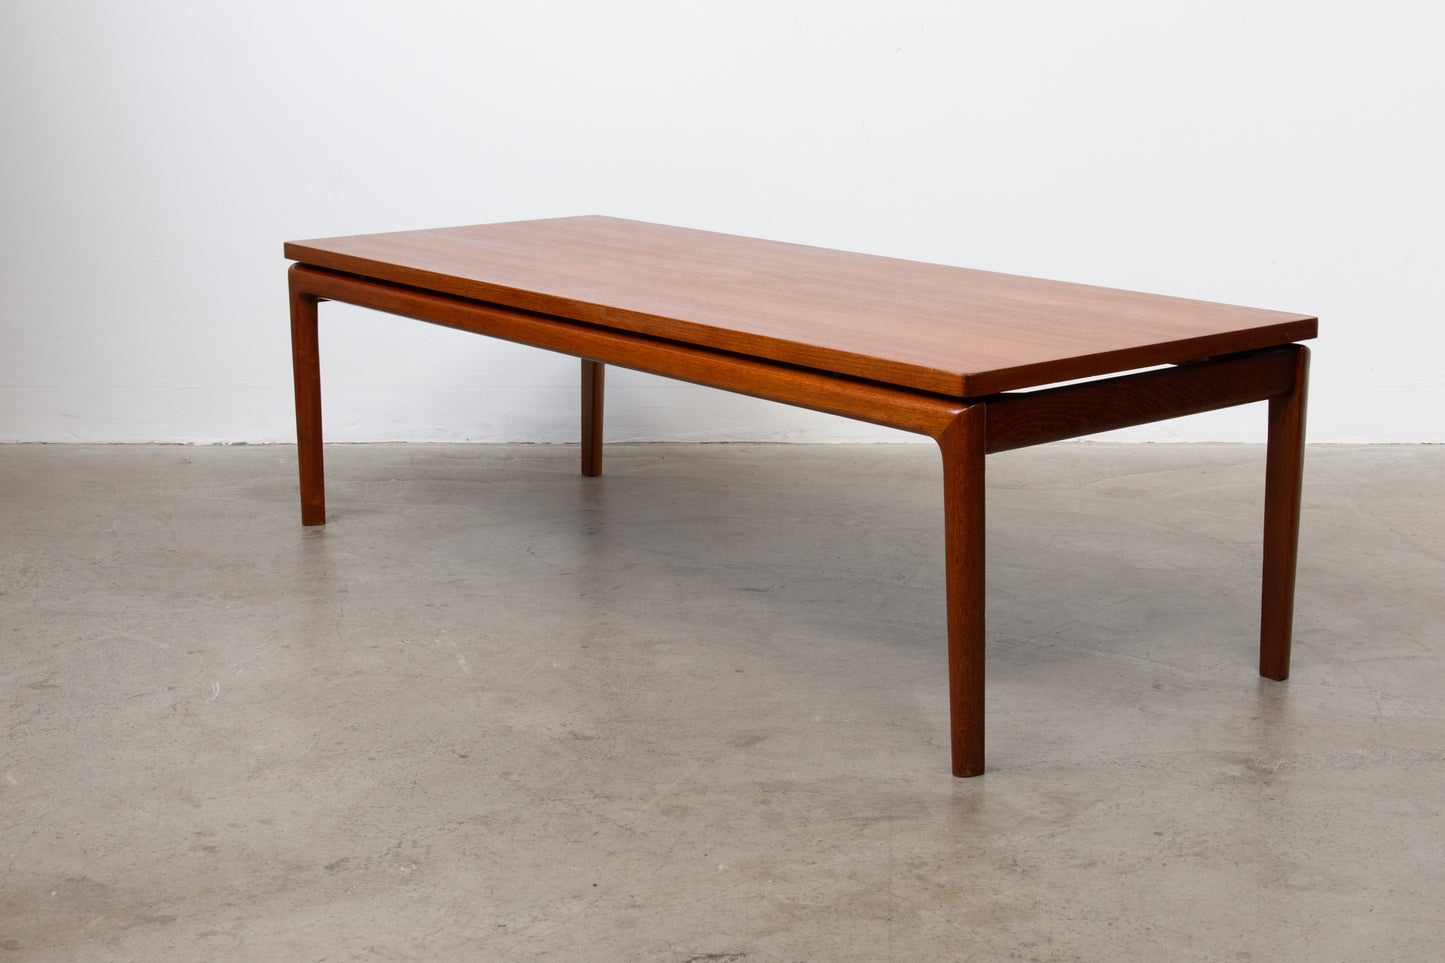 1960s teak coffee table by Ole Wanscher